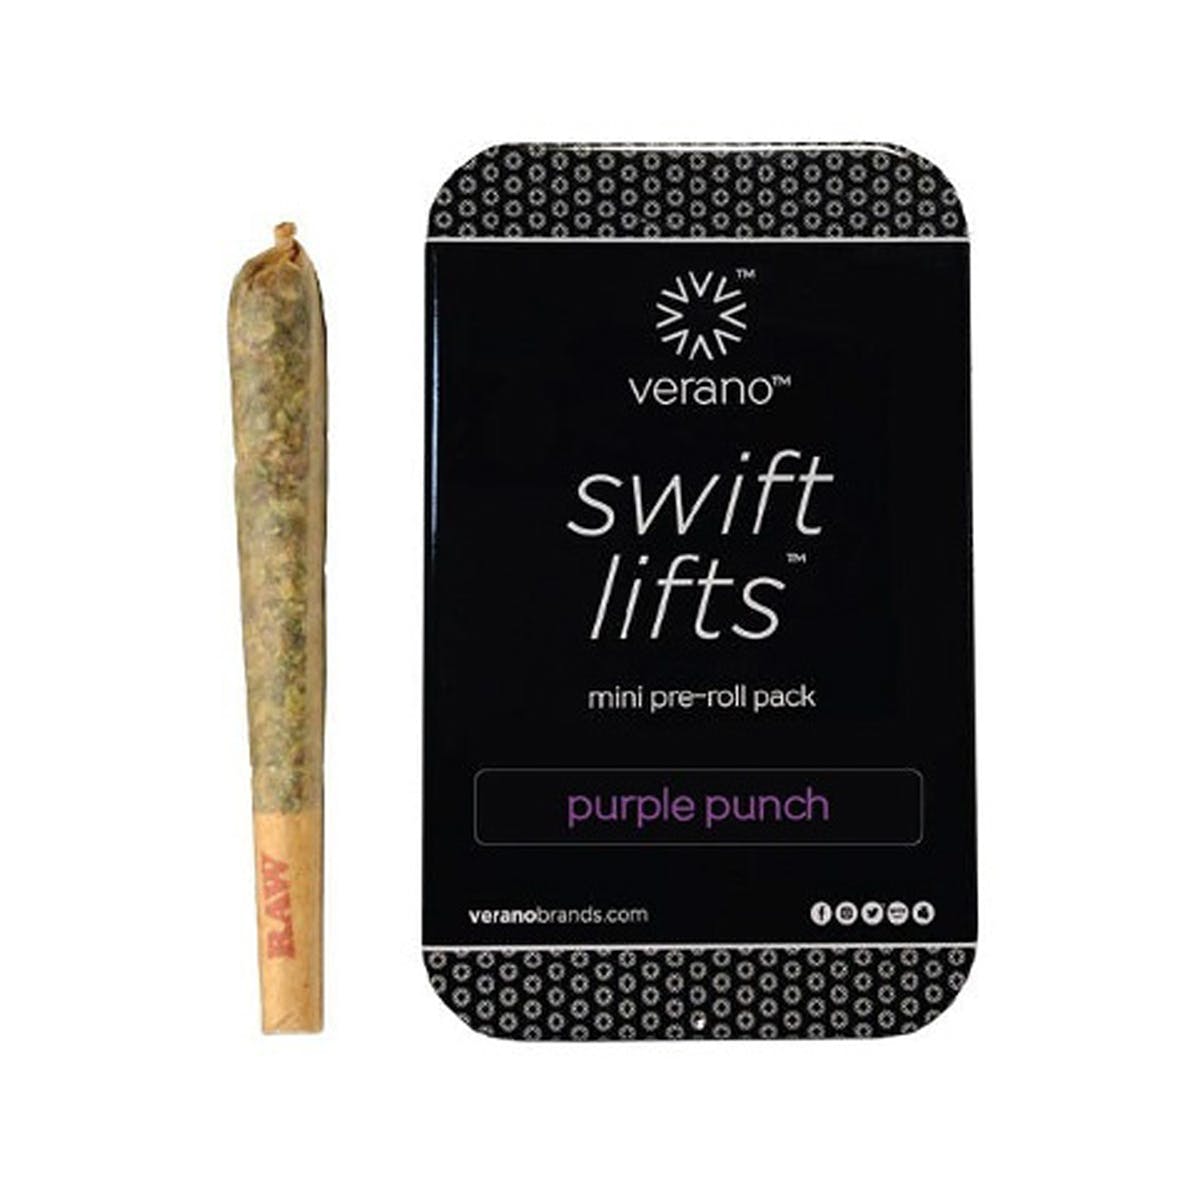 marijuana-dispensaries-your-farmacy-in-lutherville-swift-liftsa-c2-84c-mini-pre-roll-pack-purple-punch